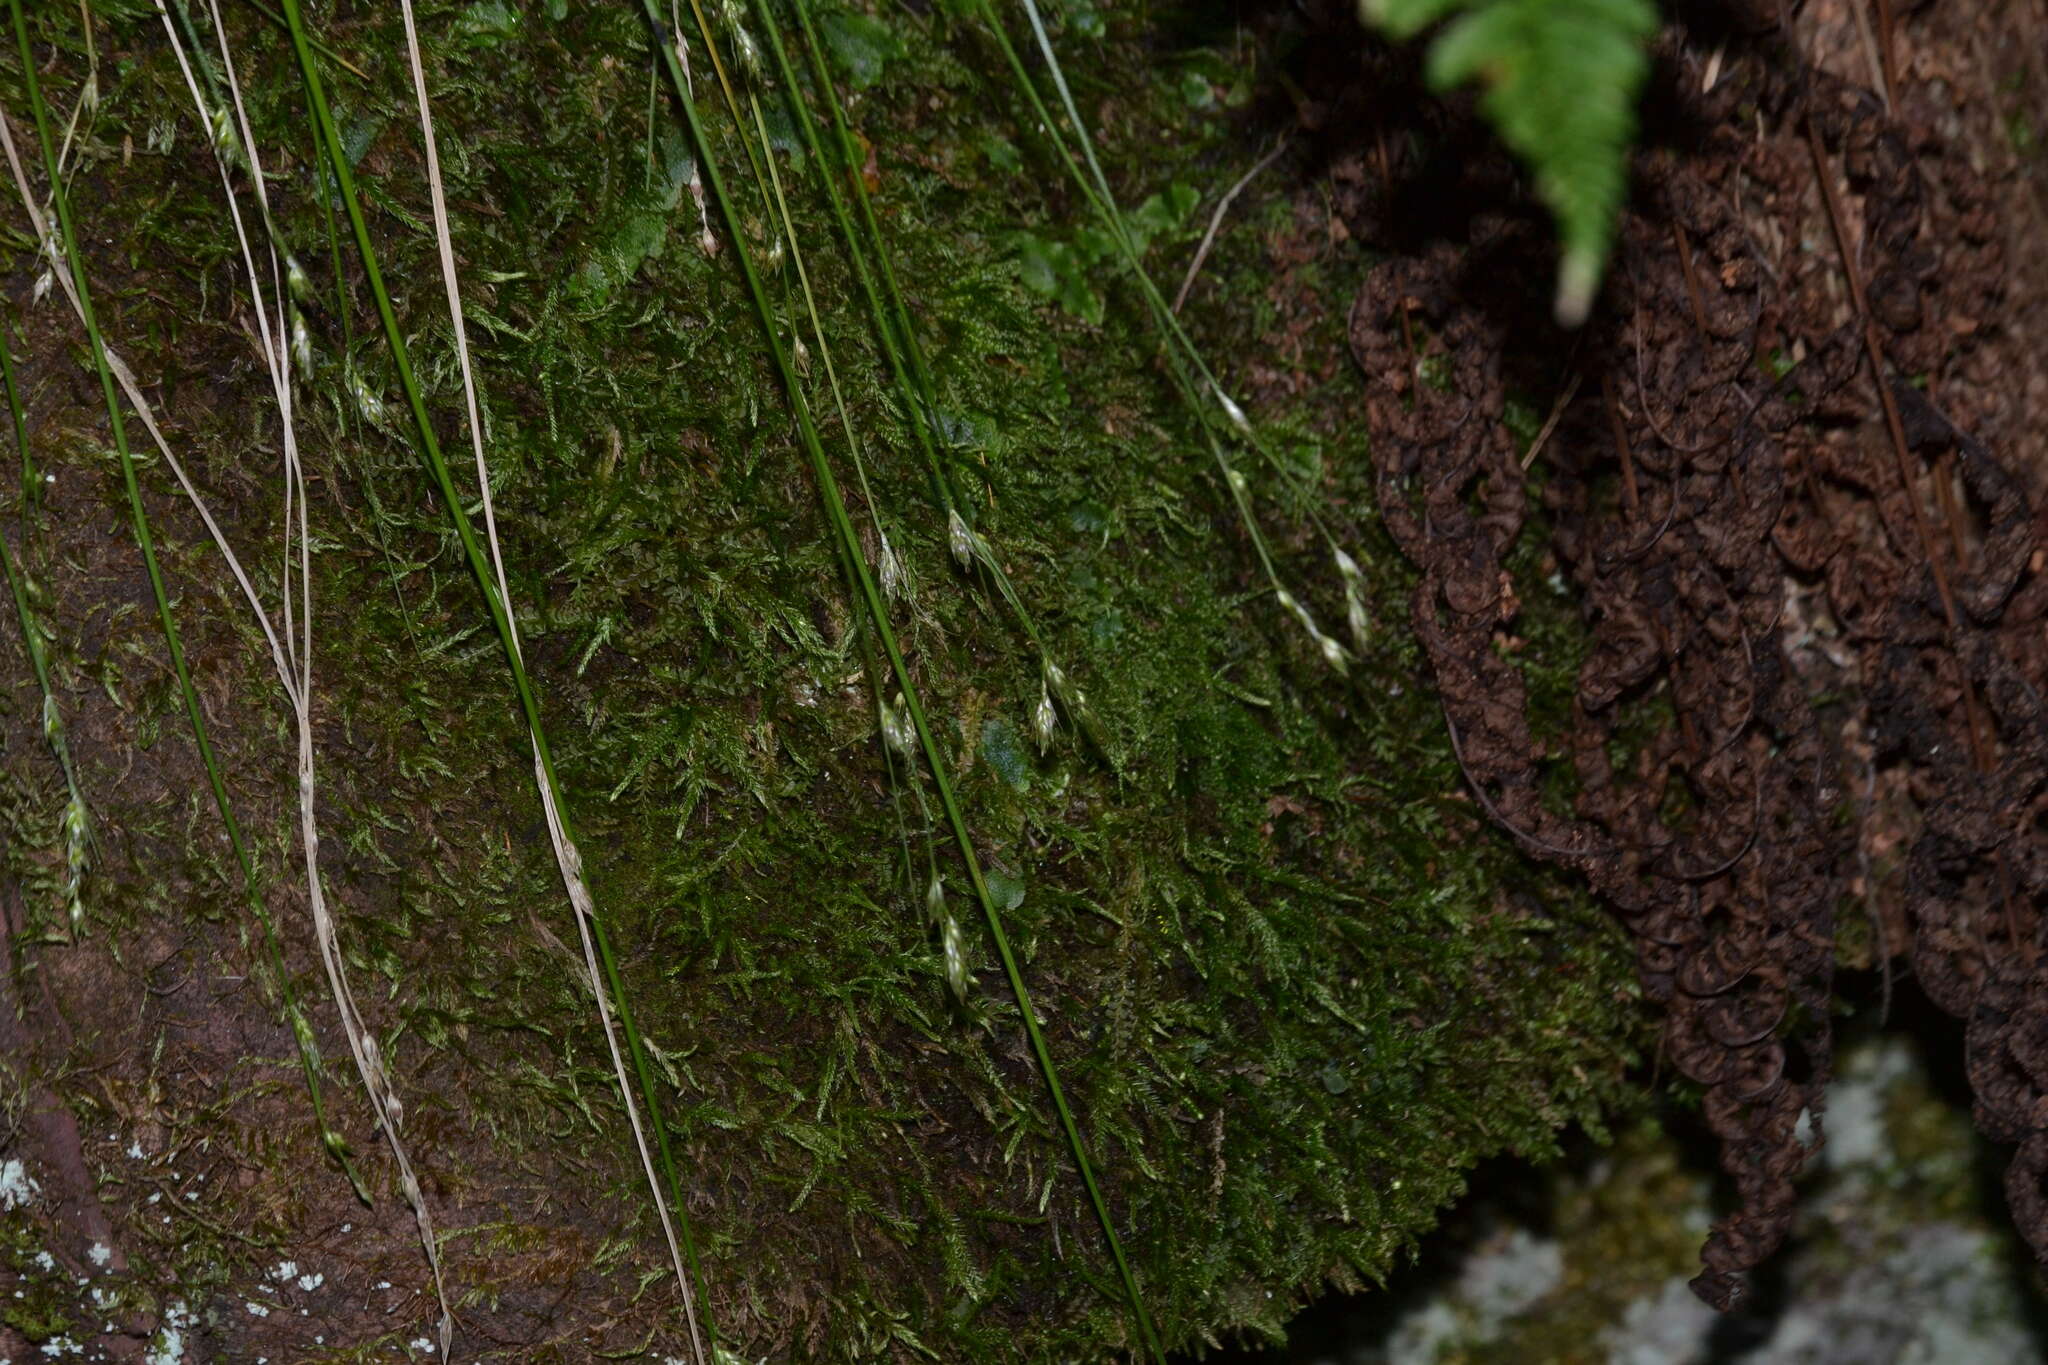 Image de Carex deweyana Schwein.